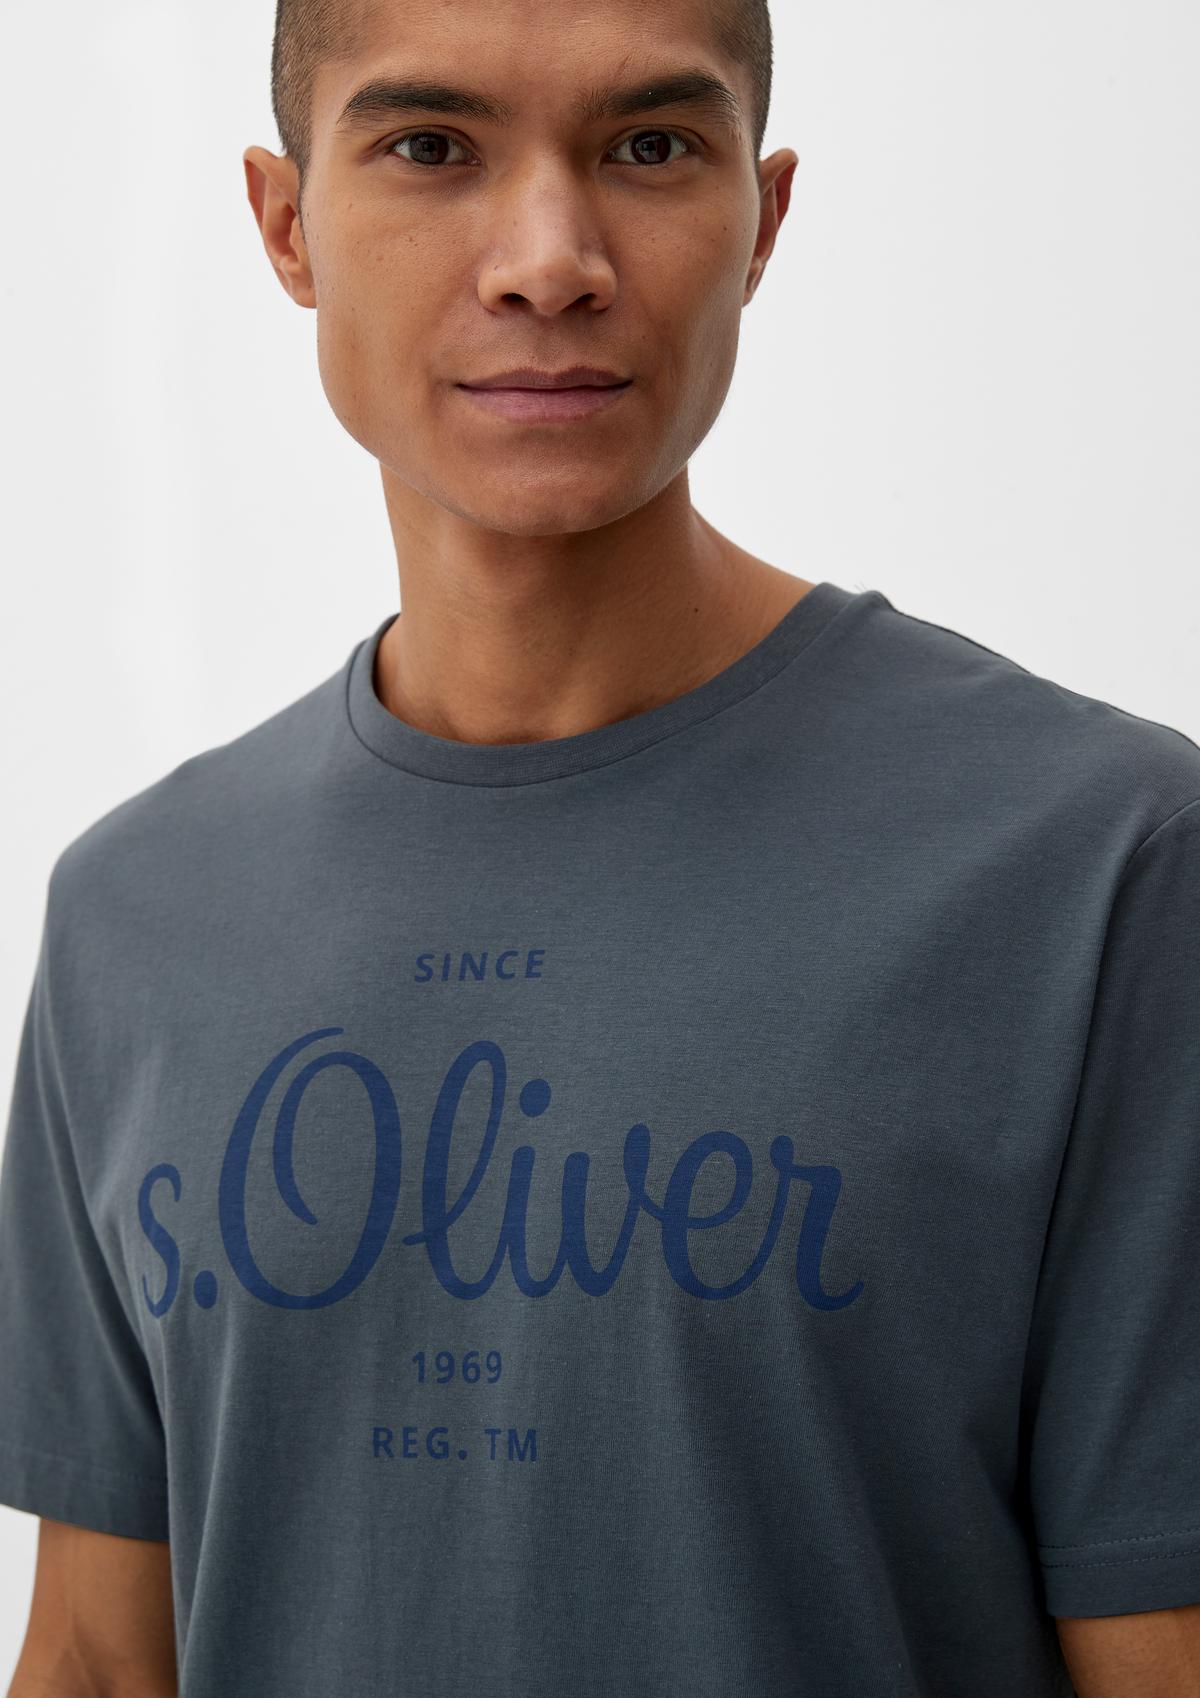 s.Oliver Labelshirt aus Jersey